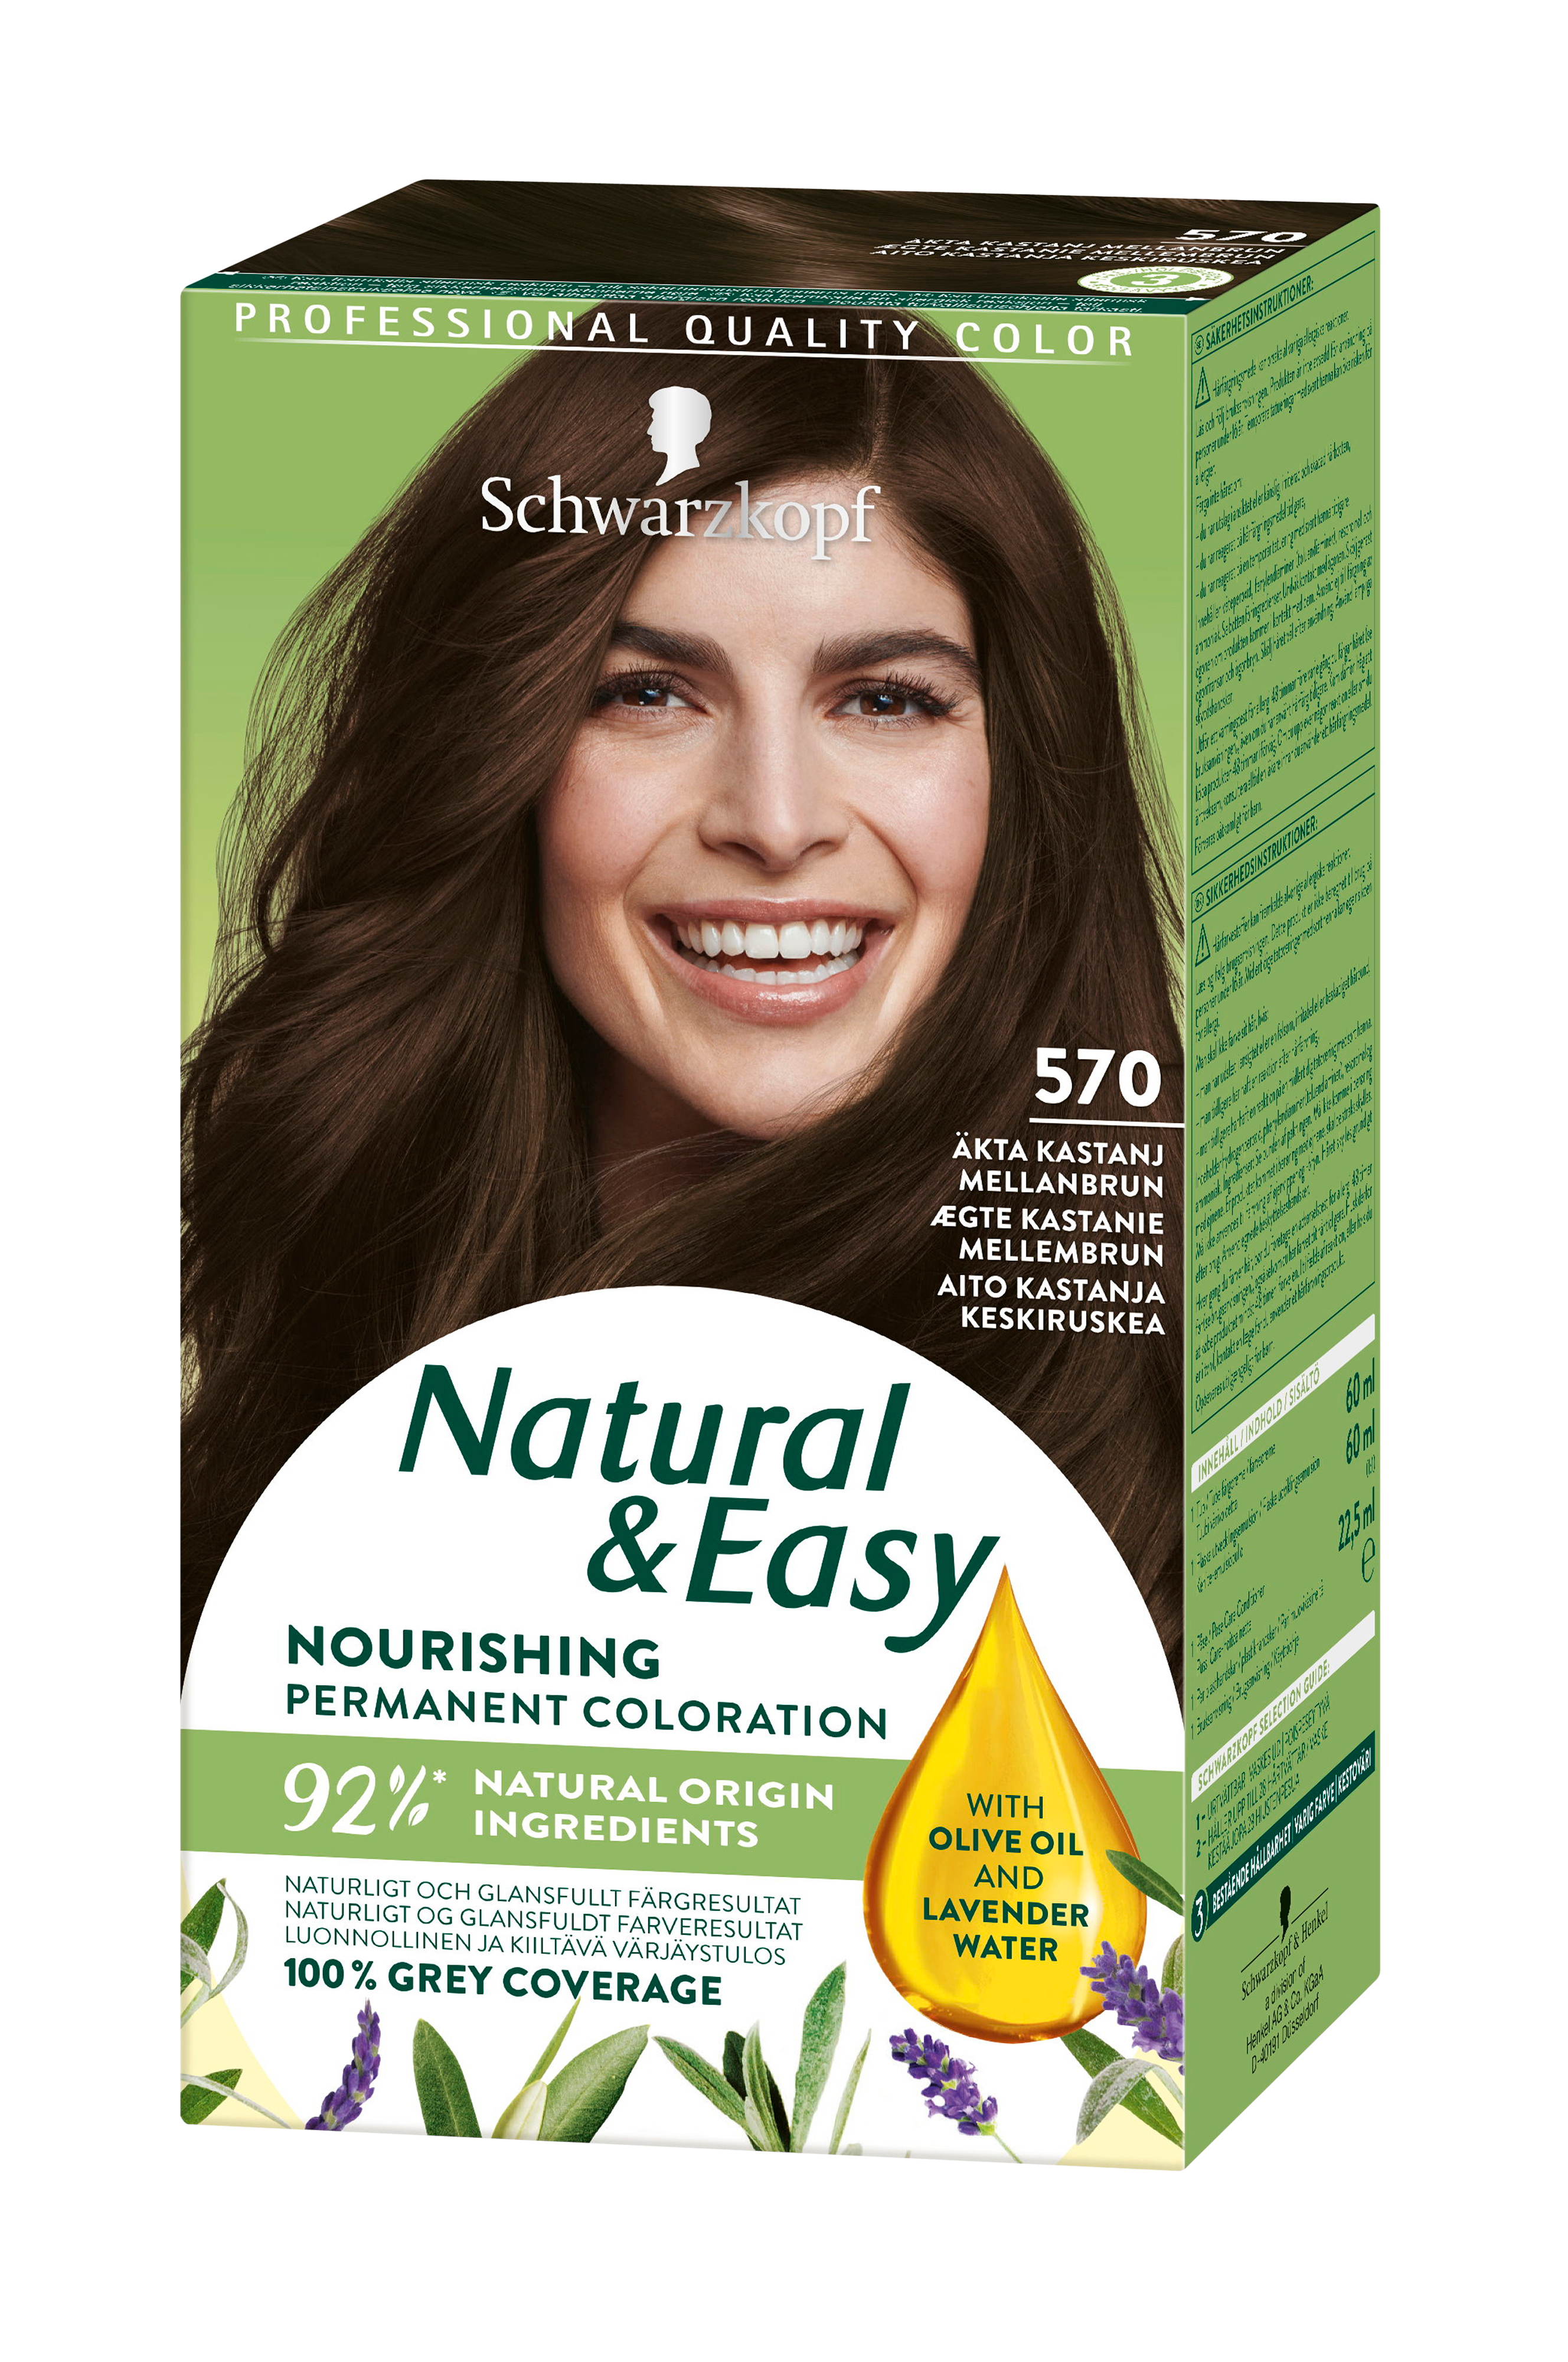 Natural easy. Schwarzkopf natural easy палитра. Краска для волос 533 Schwarzkopf natural easy Nourishing. Реклама Schwarzkopf natural & easy (2006). Инструкция Schwarzkopf naturel & easy.